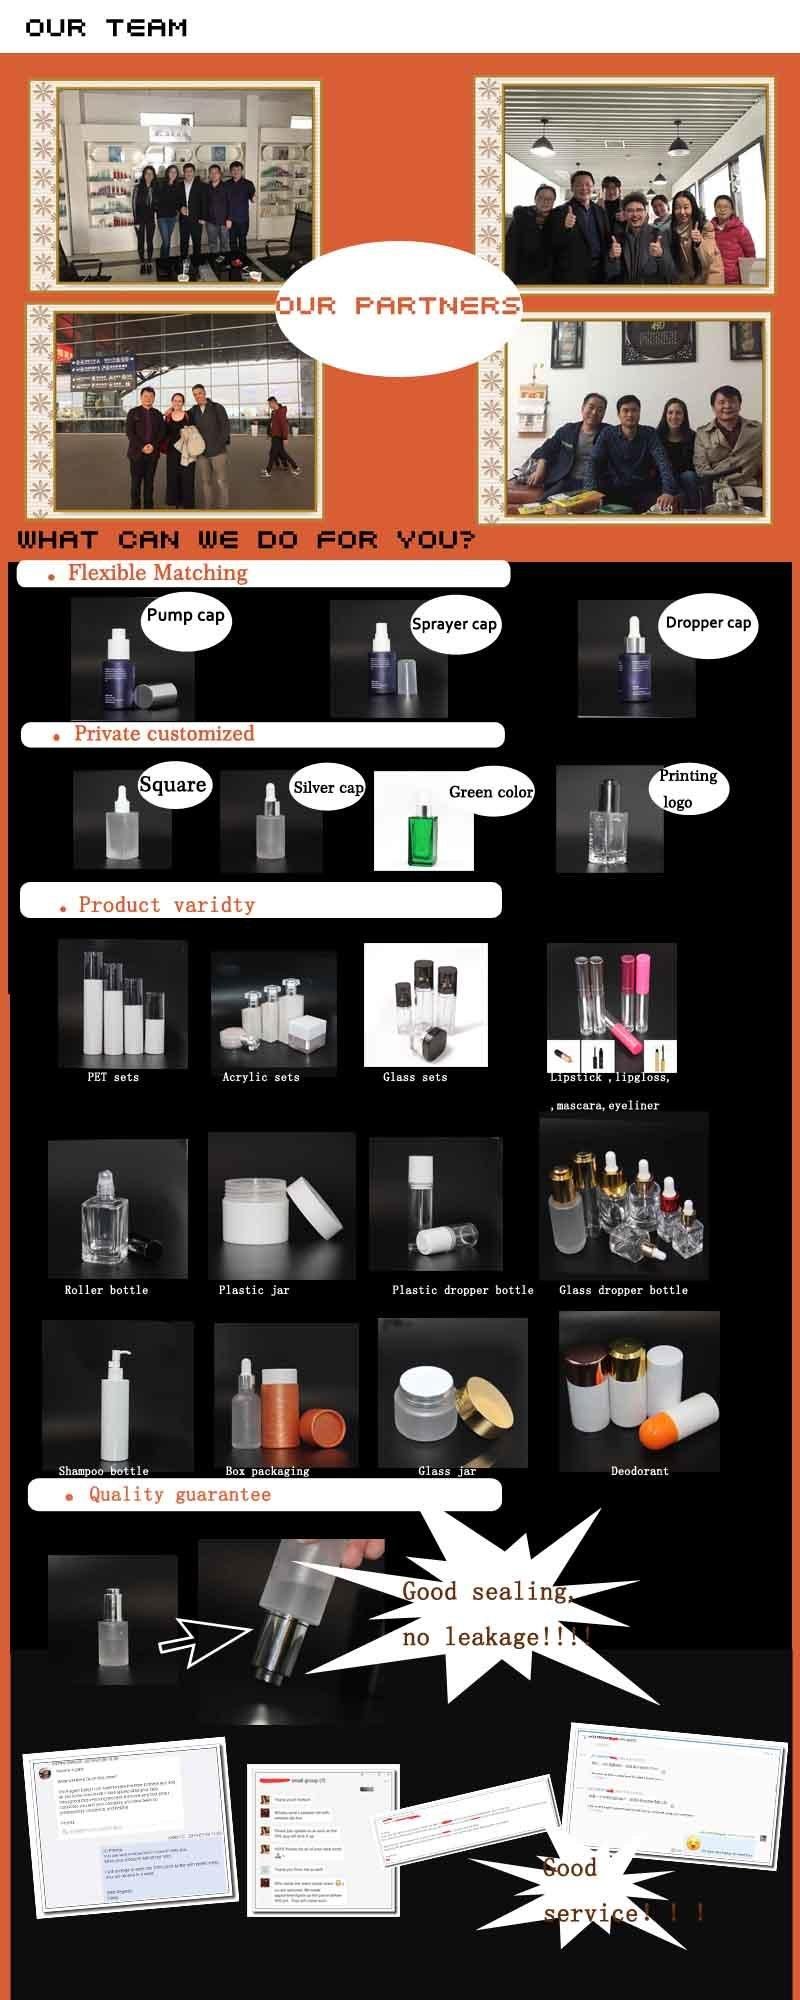 50GM 100ml 50ml Acrylic Cosmetic White Jars and Packaging Luxury Cosmetic Plastic Jar